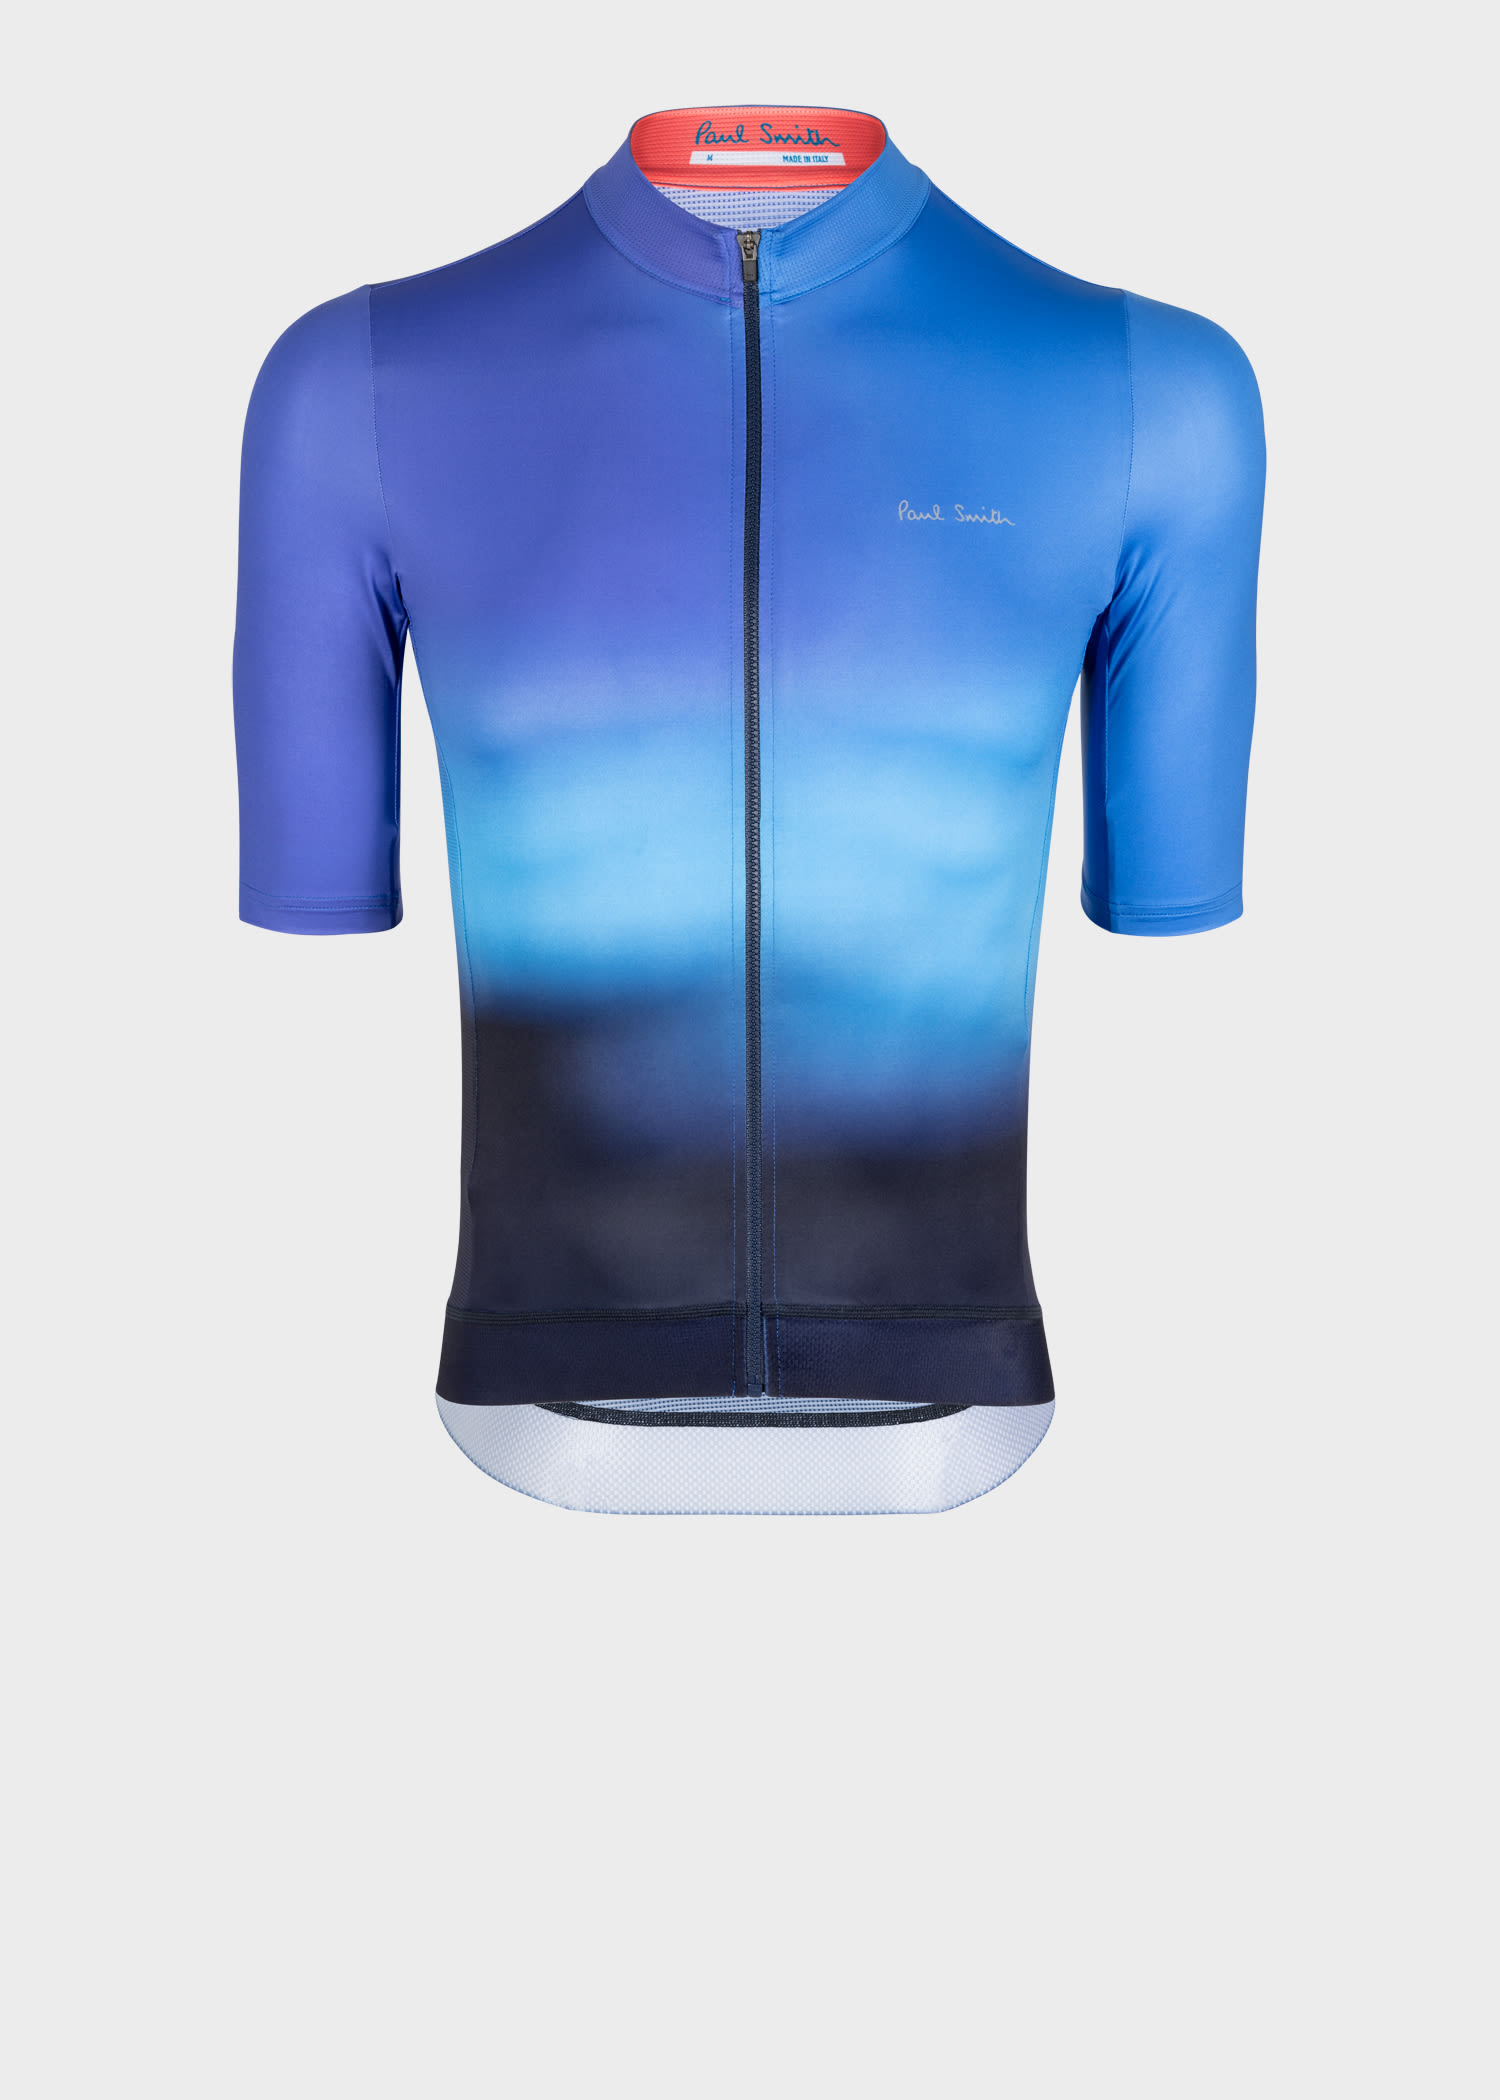 cycling jersey blue